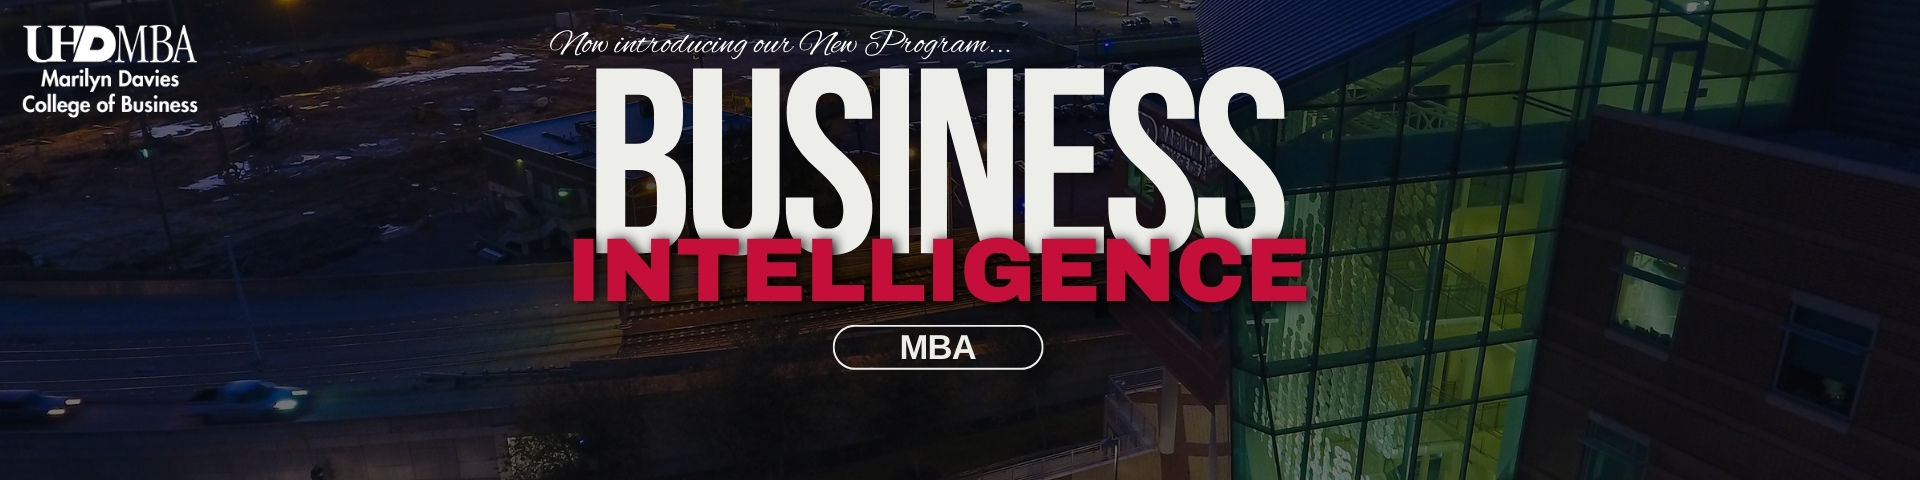 New MBA Program-Business Intelligence